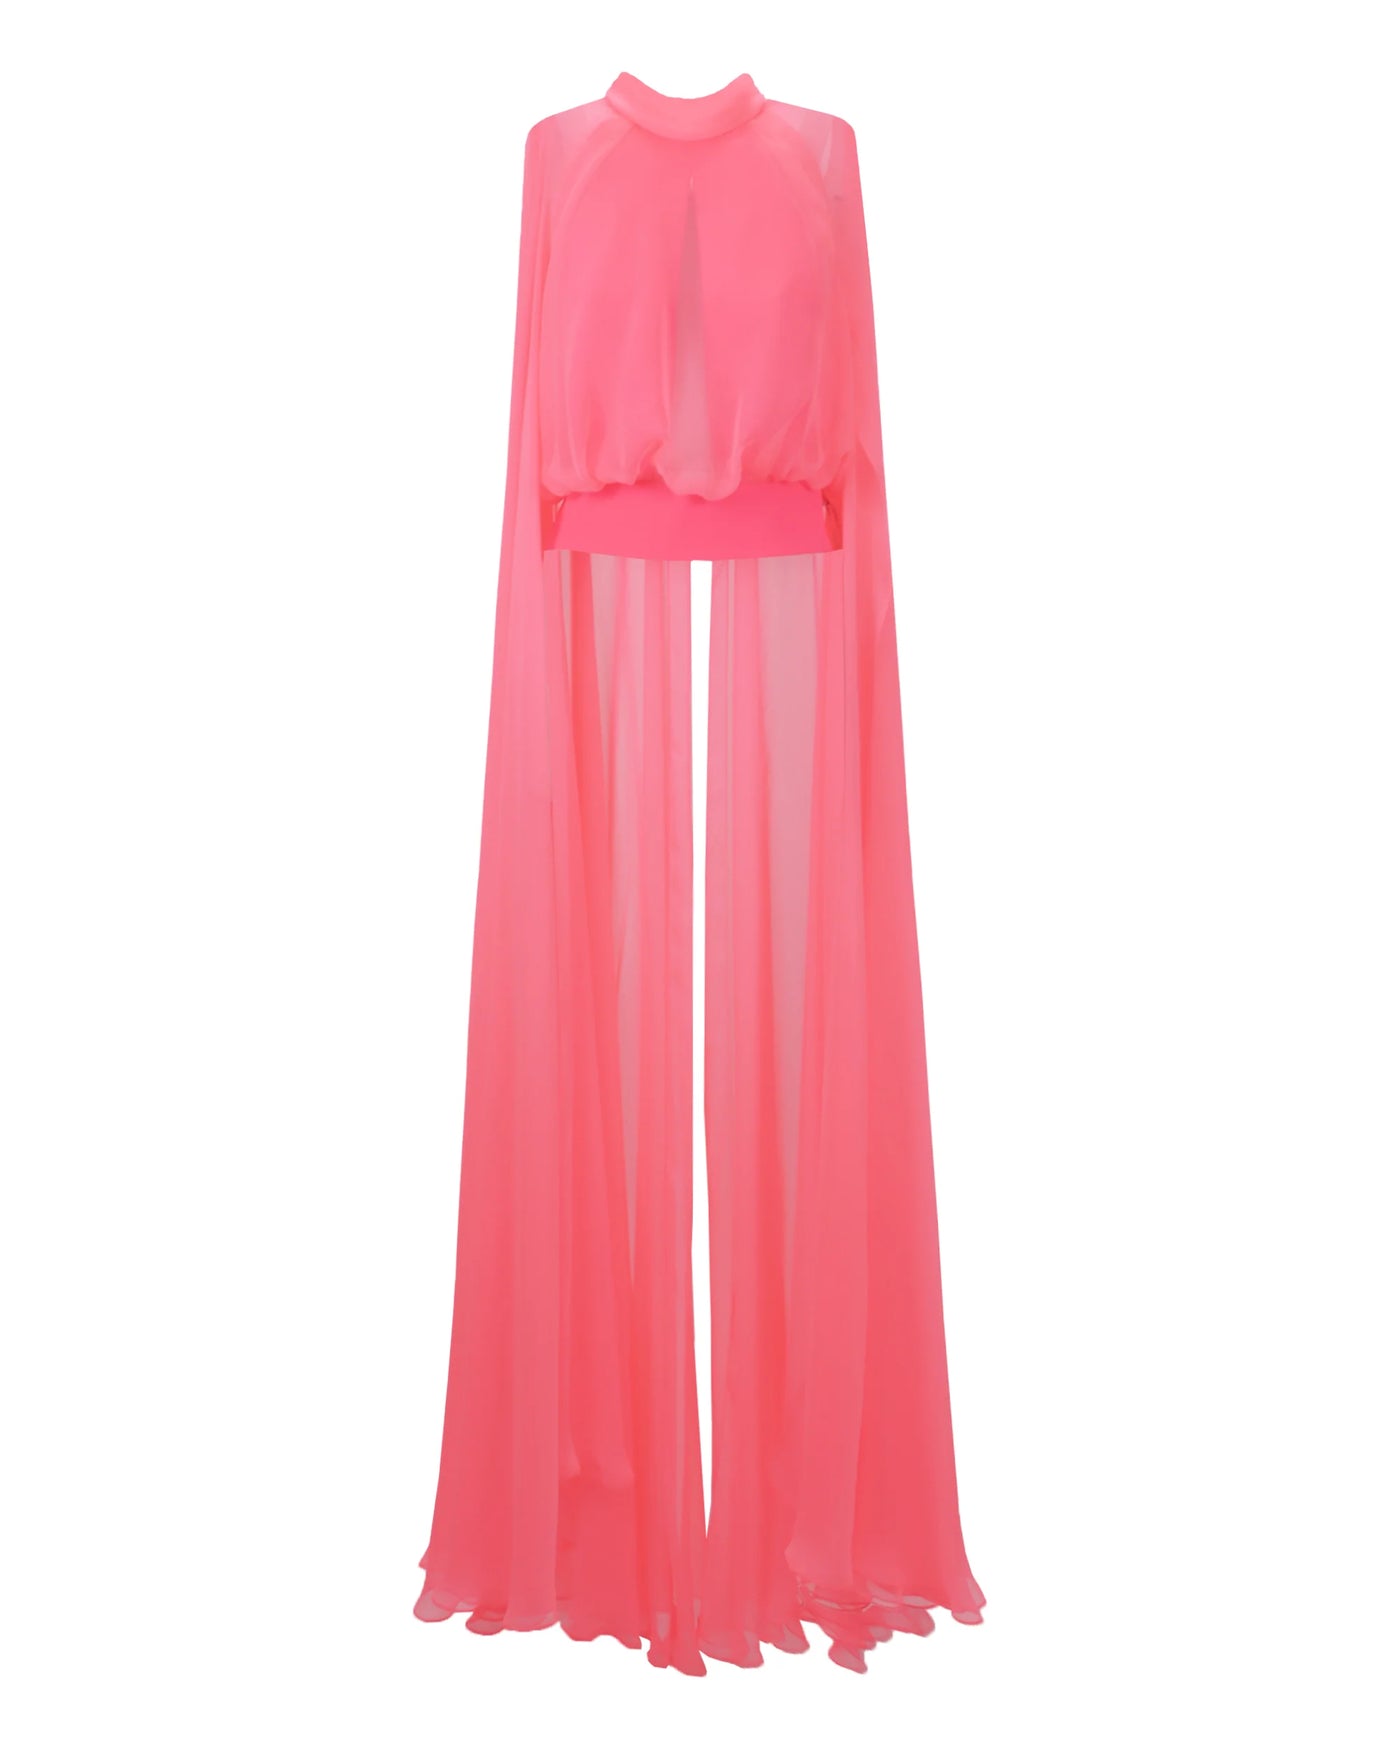 High-Neckline Neon Pink Top and Mermaid Cut Skirt